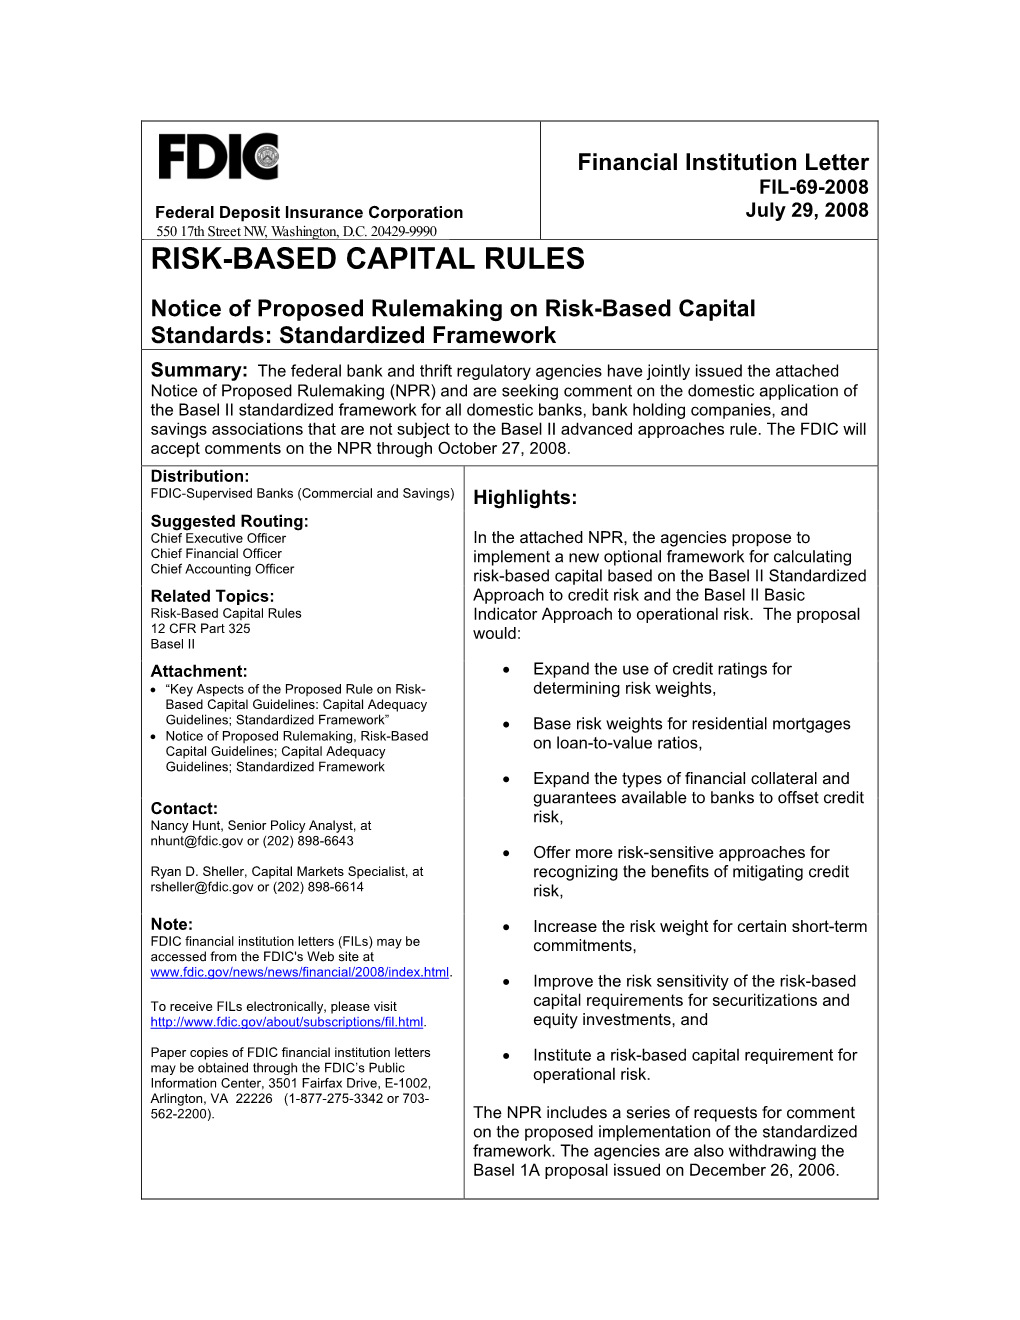 Risk-Based Capital Rules